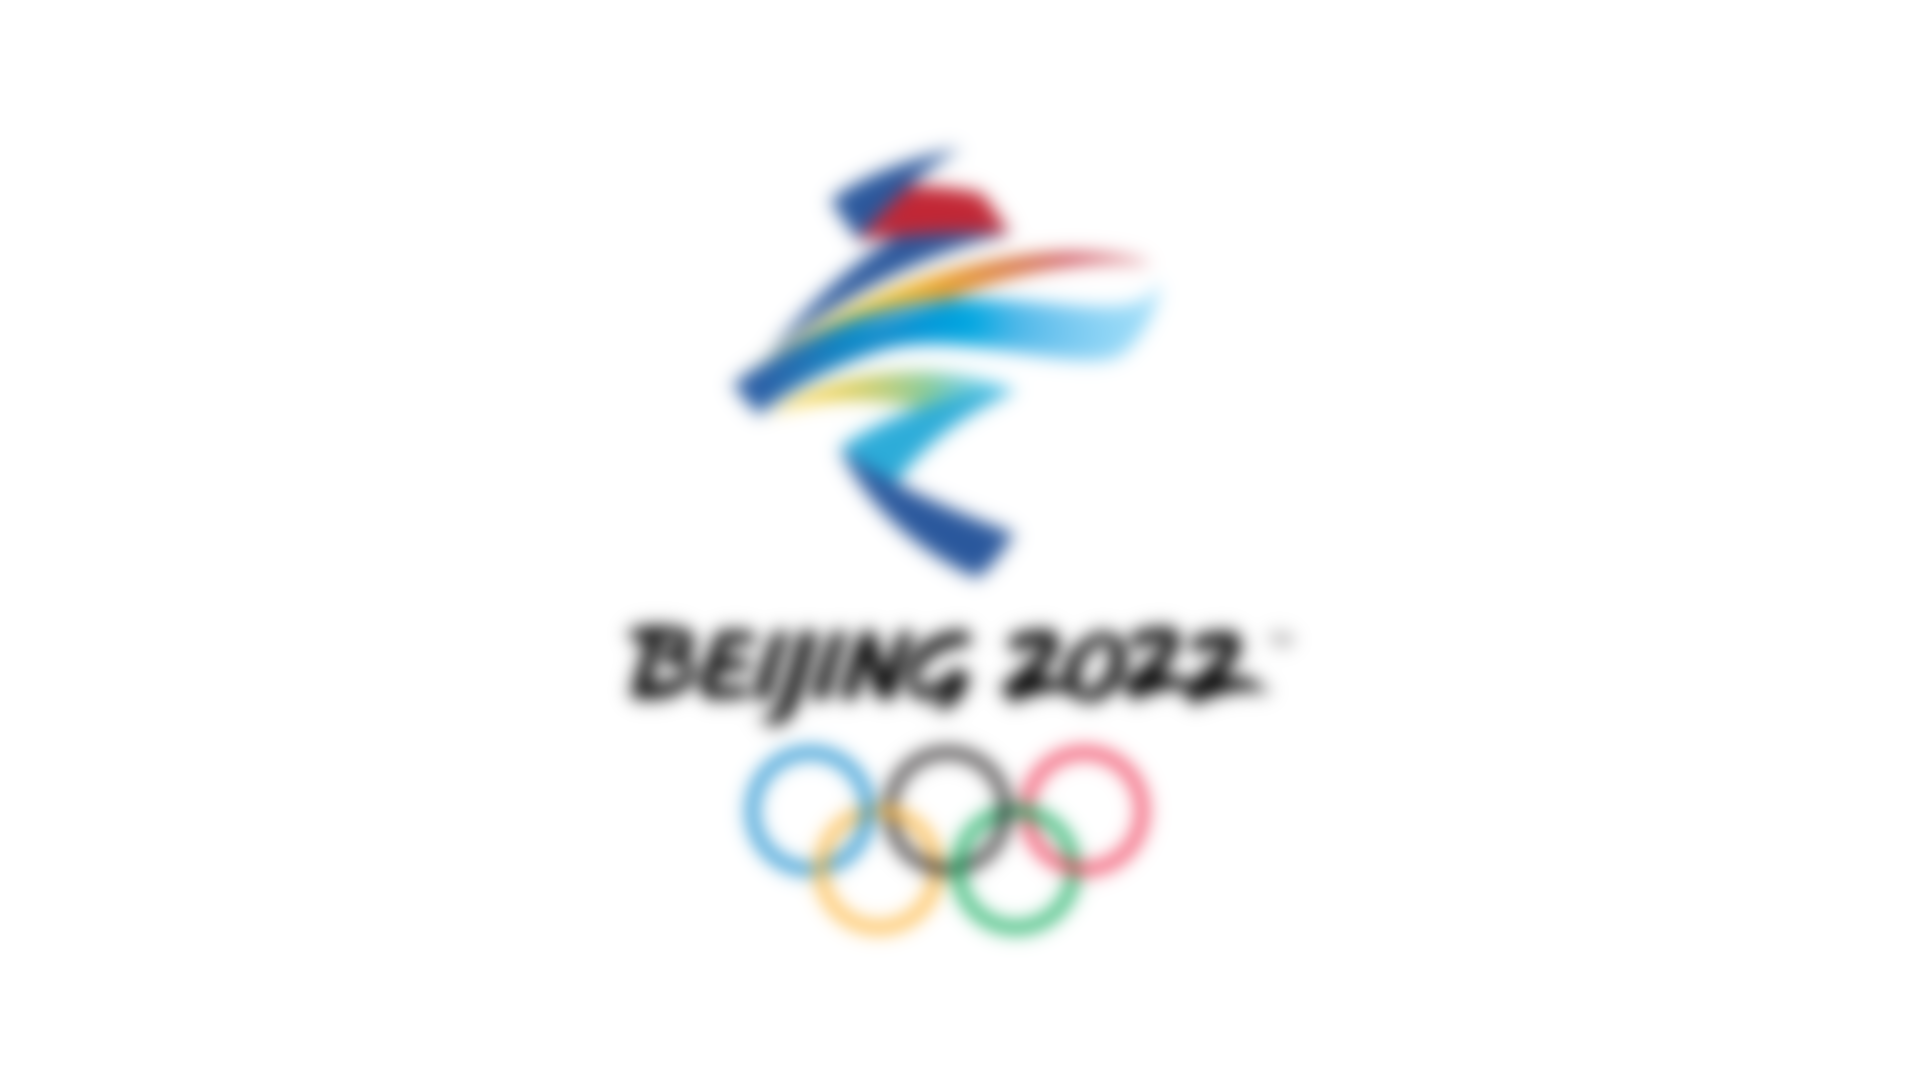 Emblema de Beijing 2022 